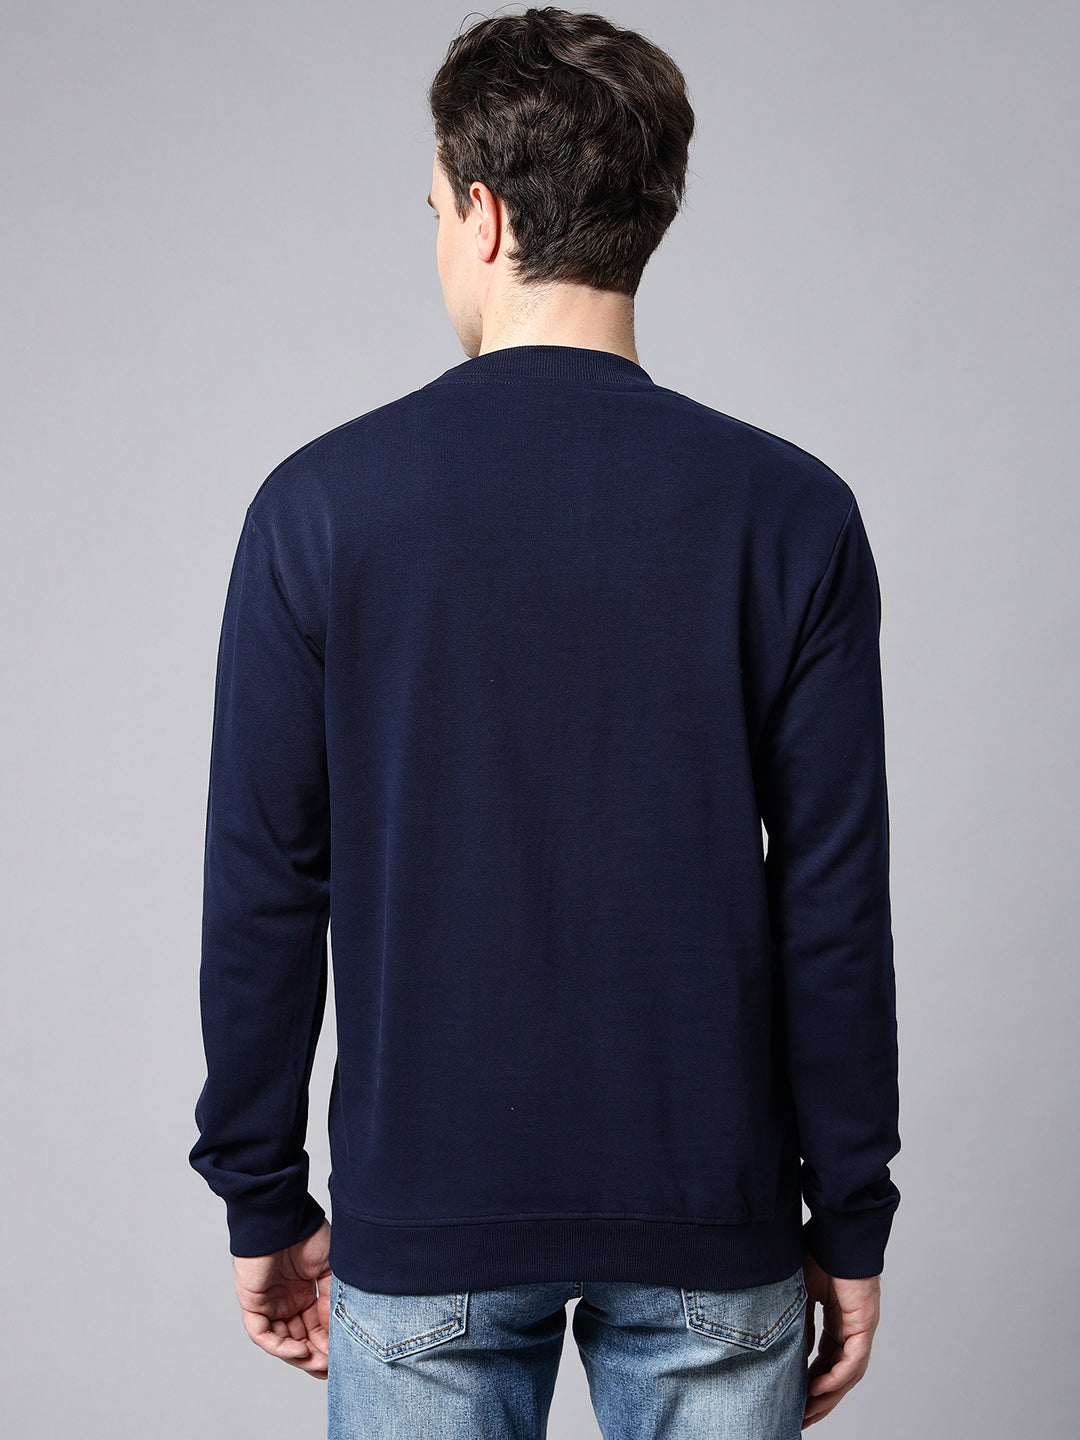 The Last Ronin Dark Blue Sweatshirt